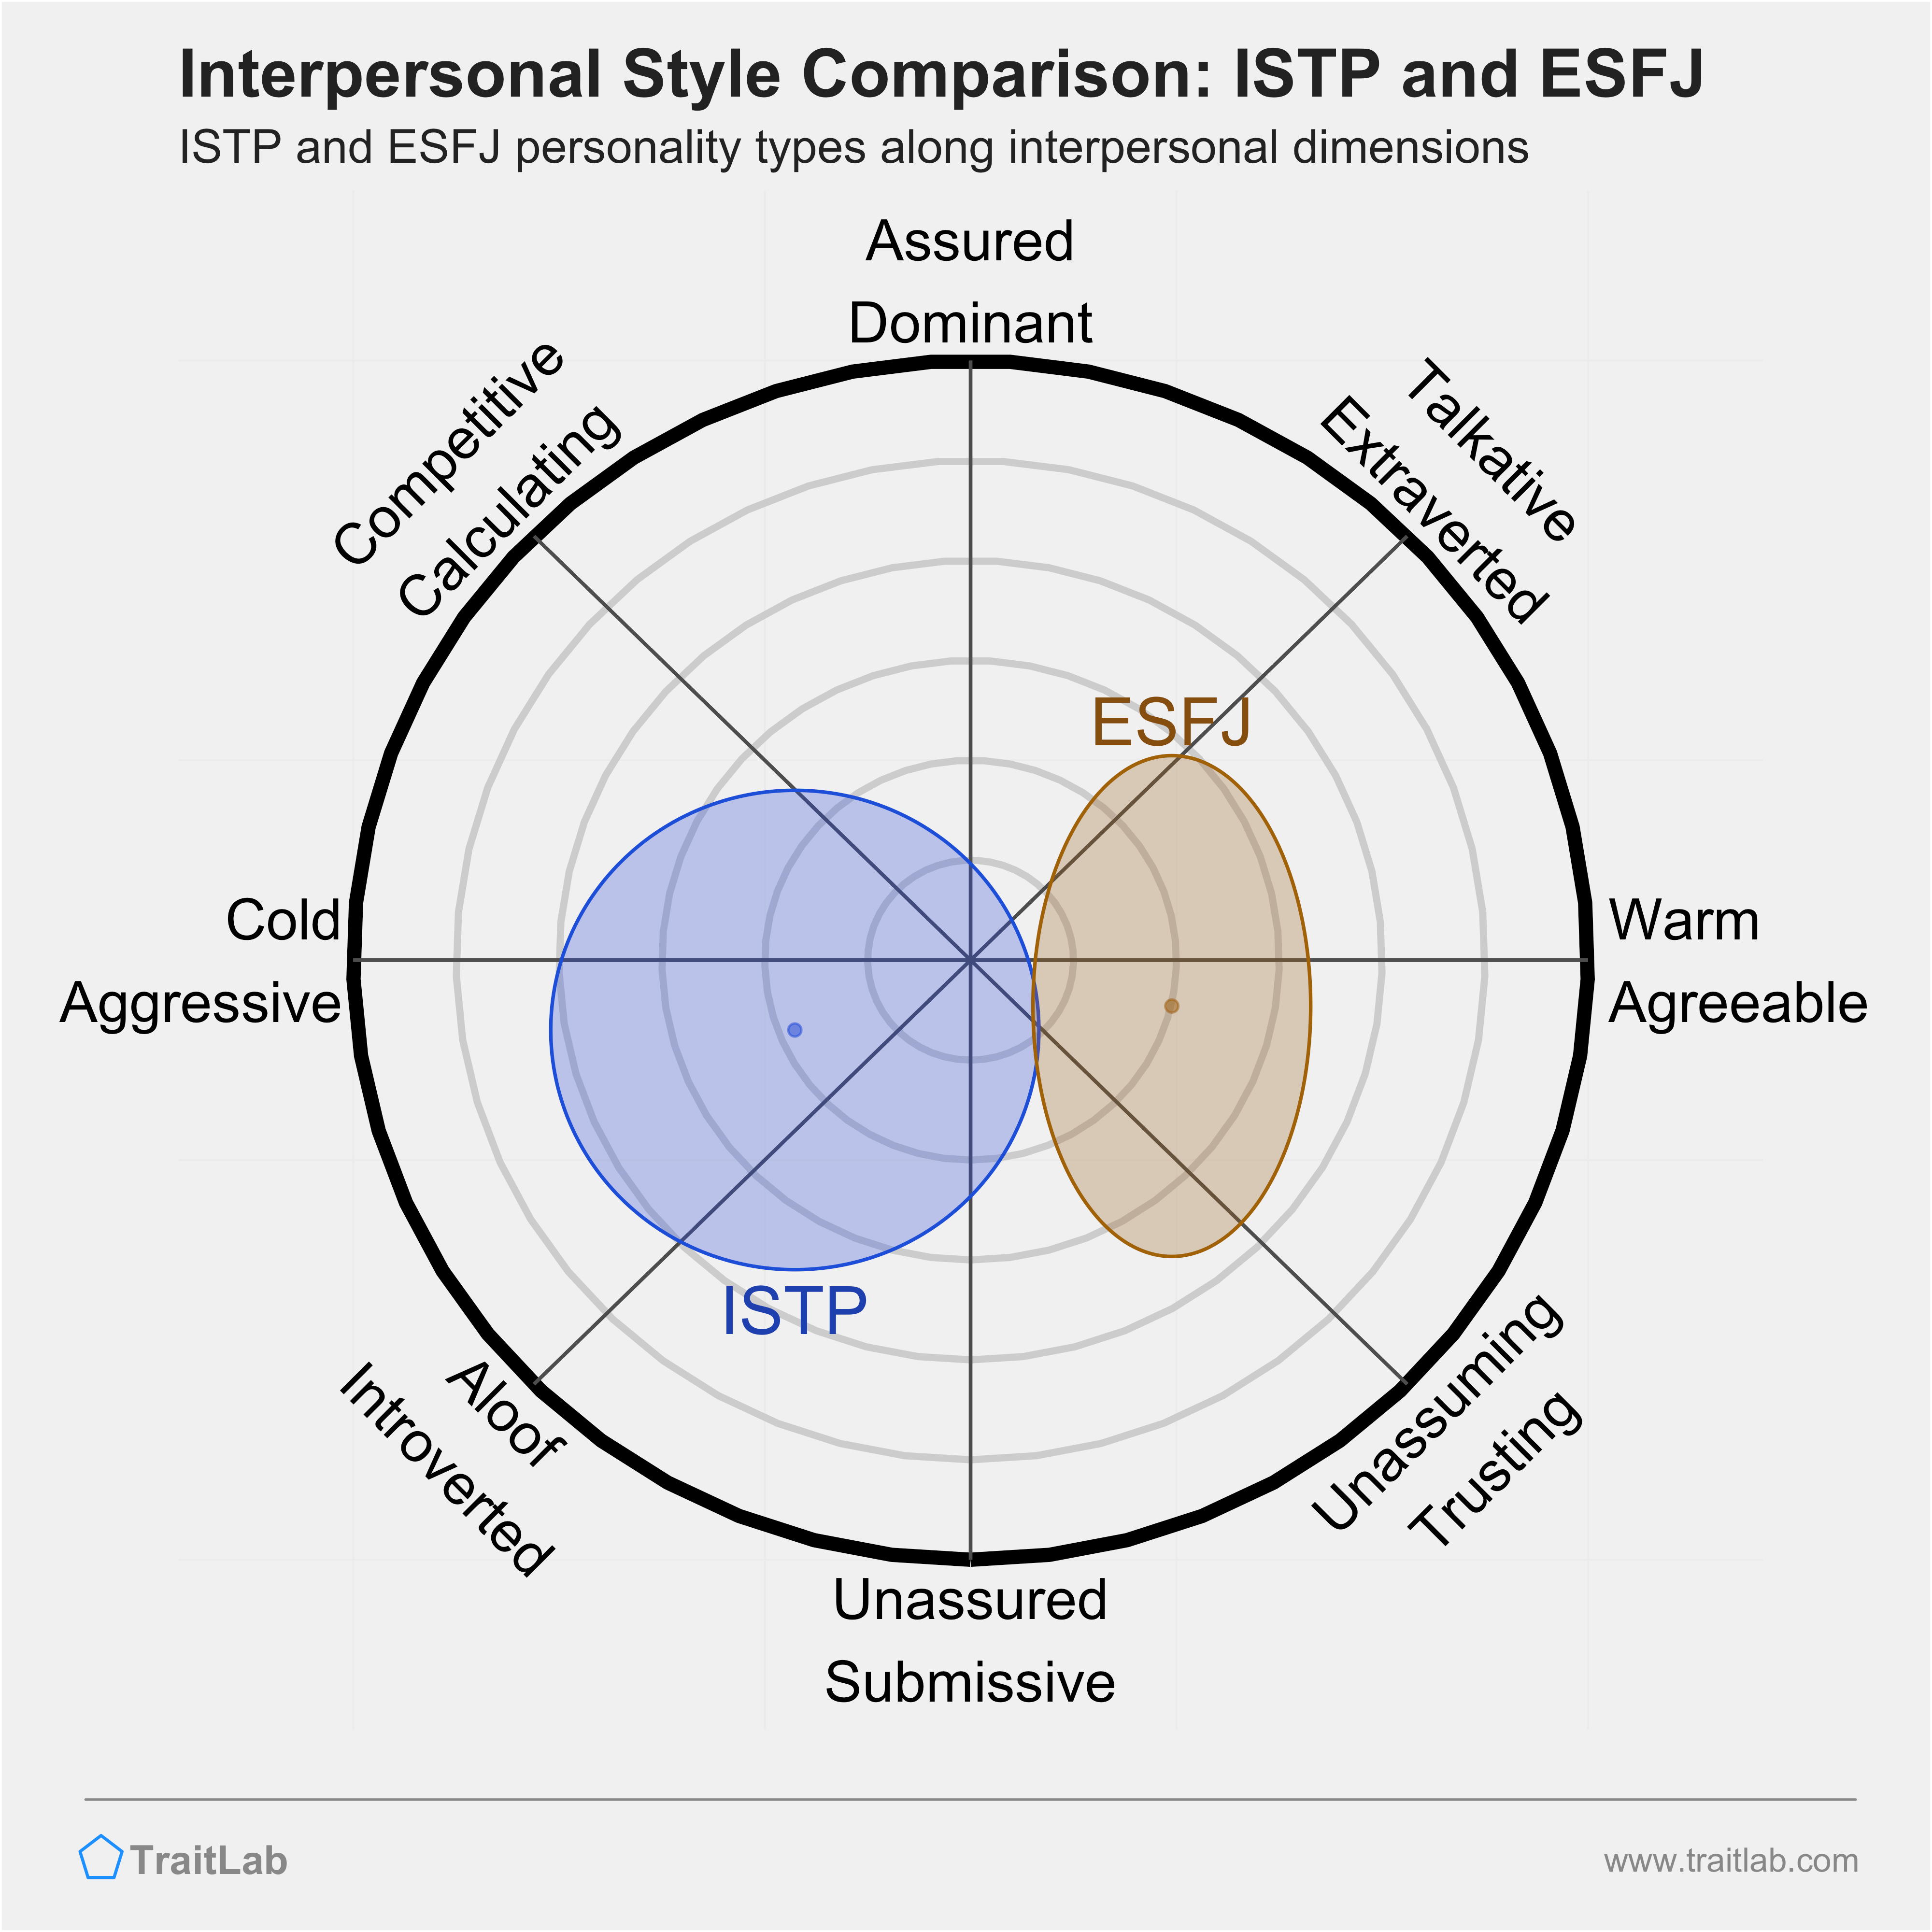 ISTP and ESFJ comparison across interpersonal dimensions